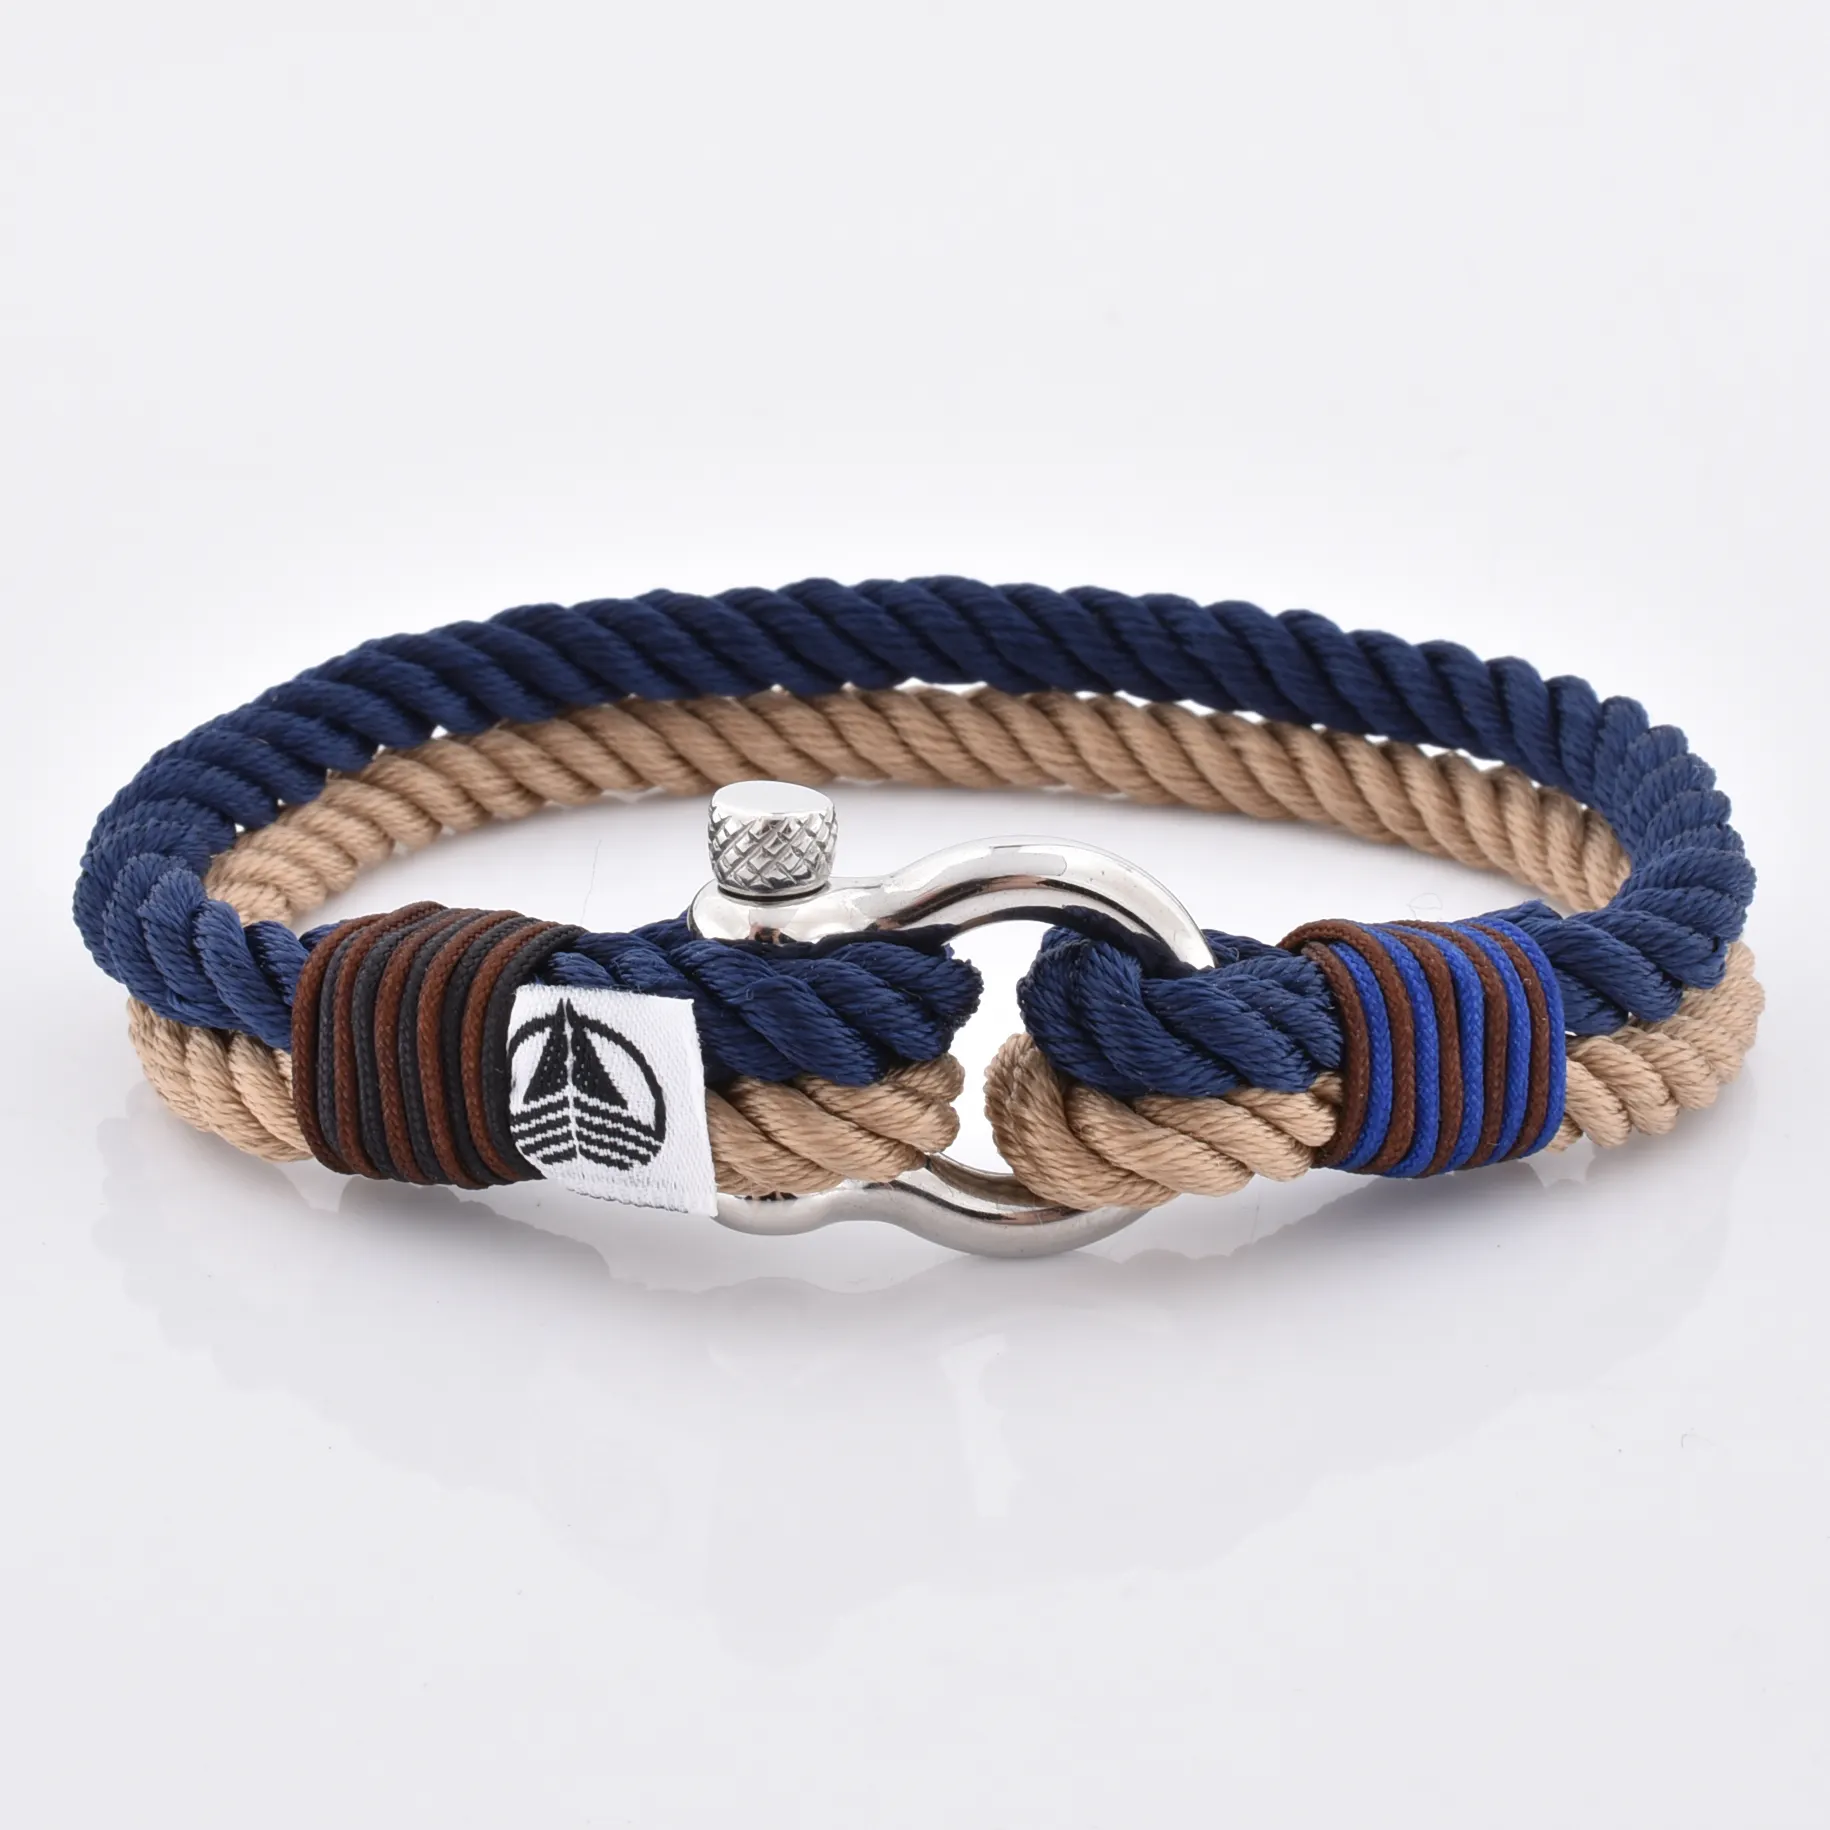 Wholesale Navy Blue And Beige Marine Sailor Rope Nautical Shackle Bracelet